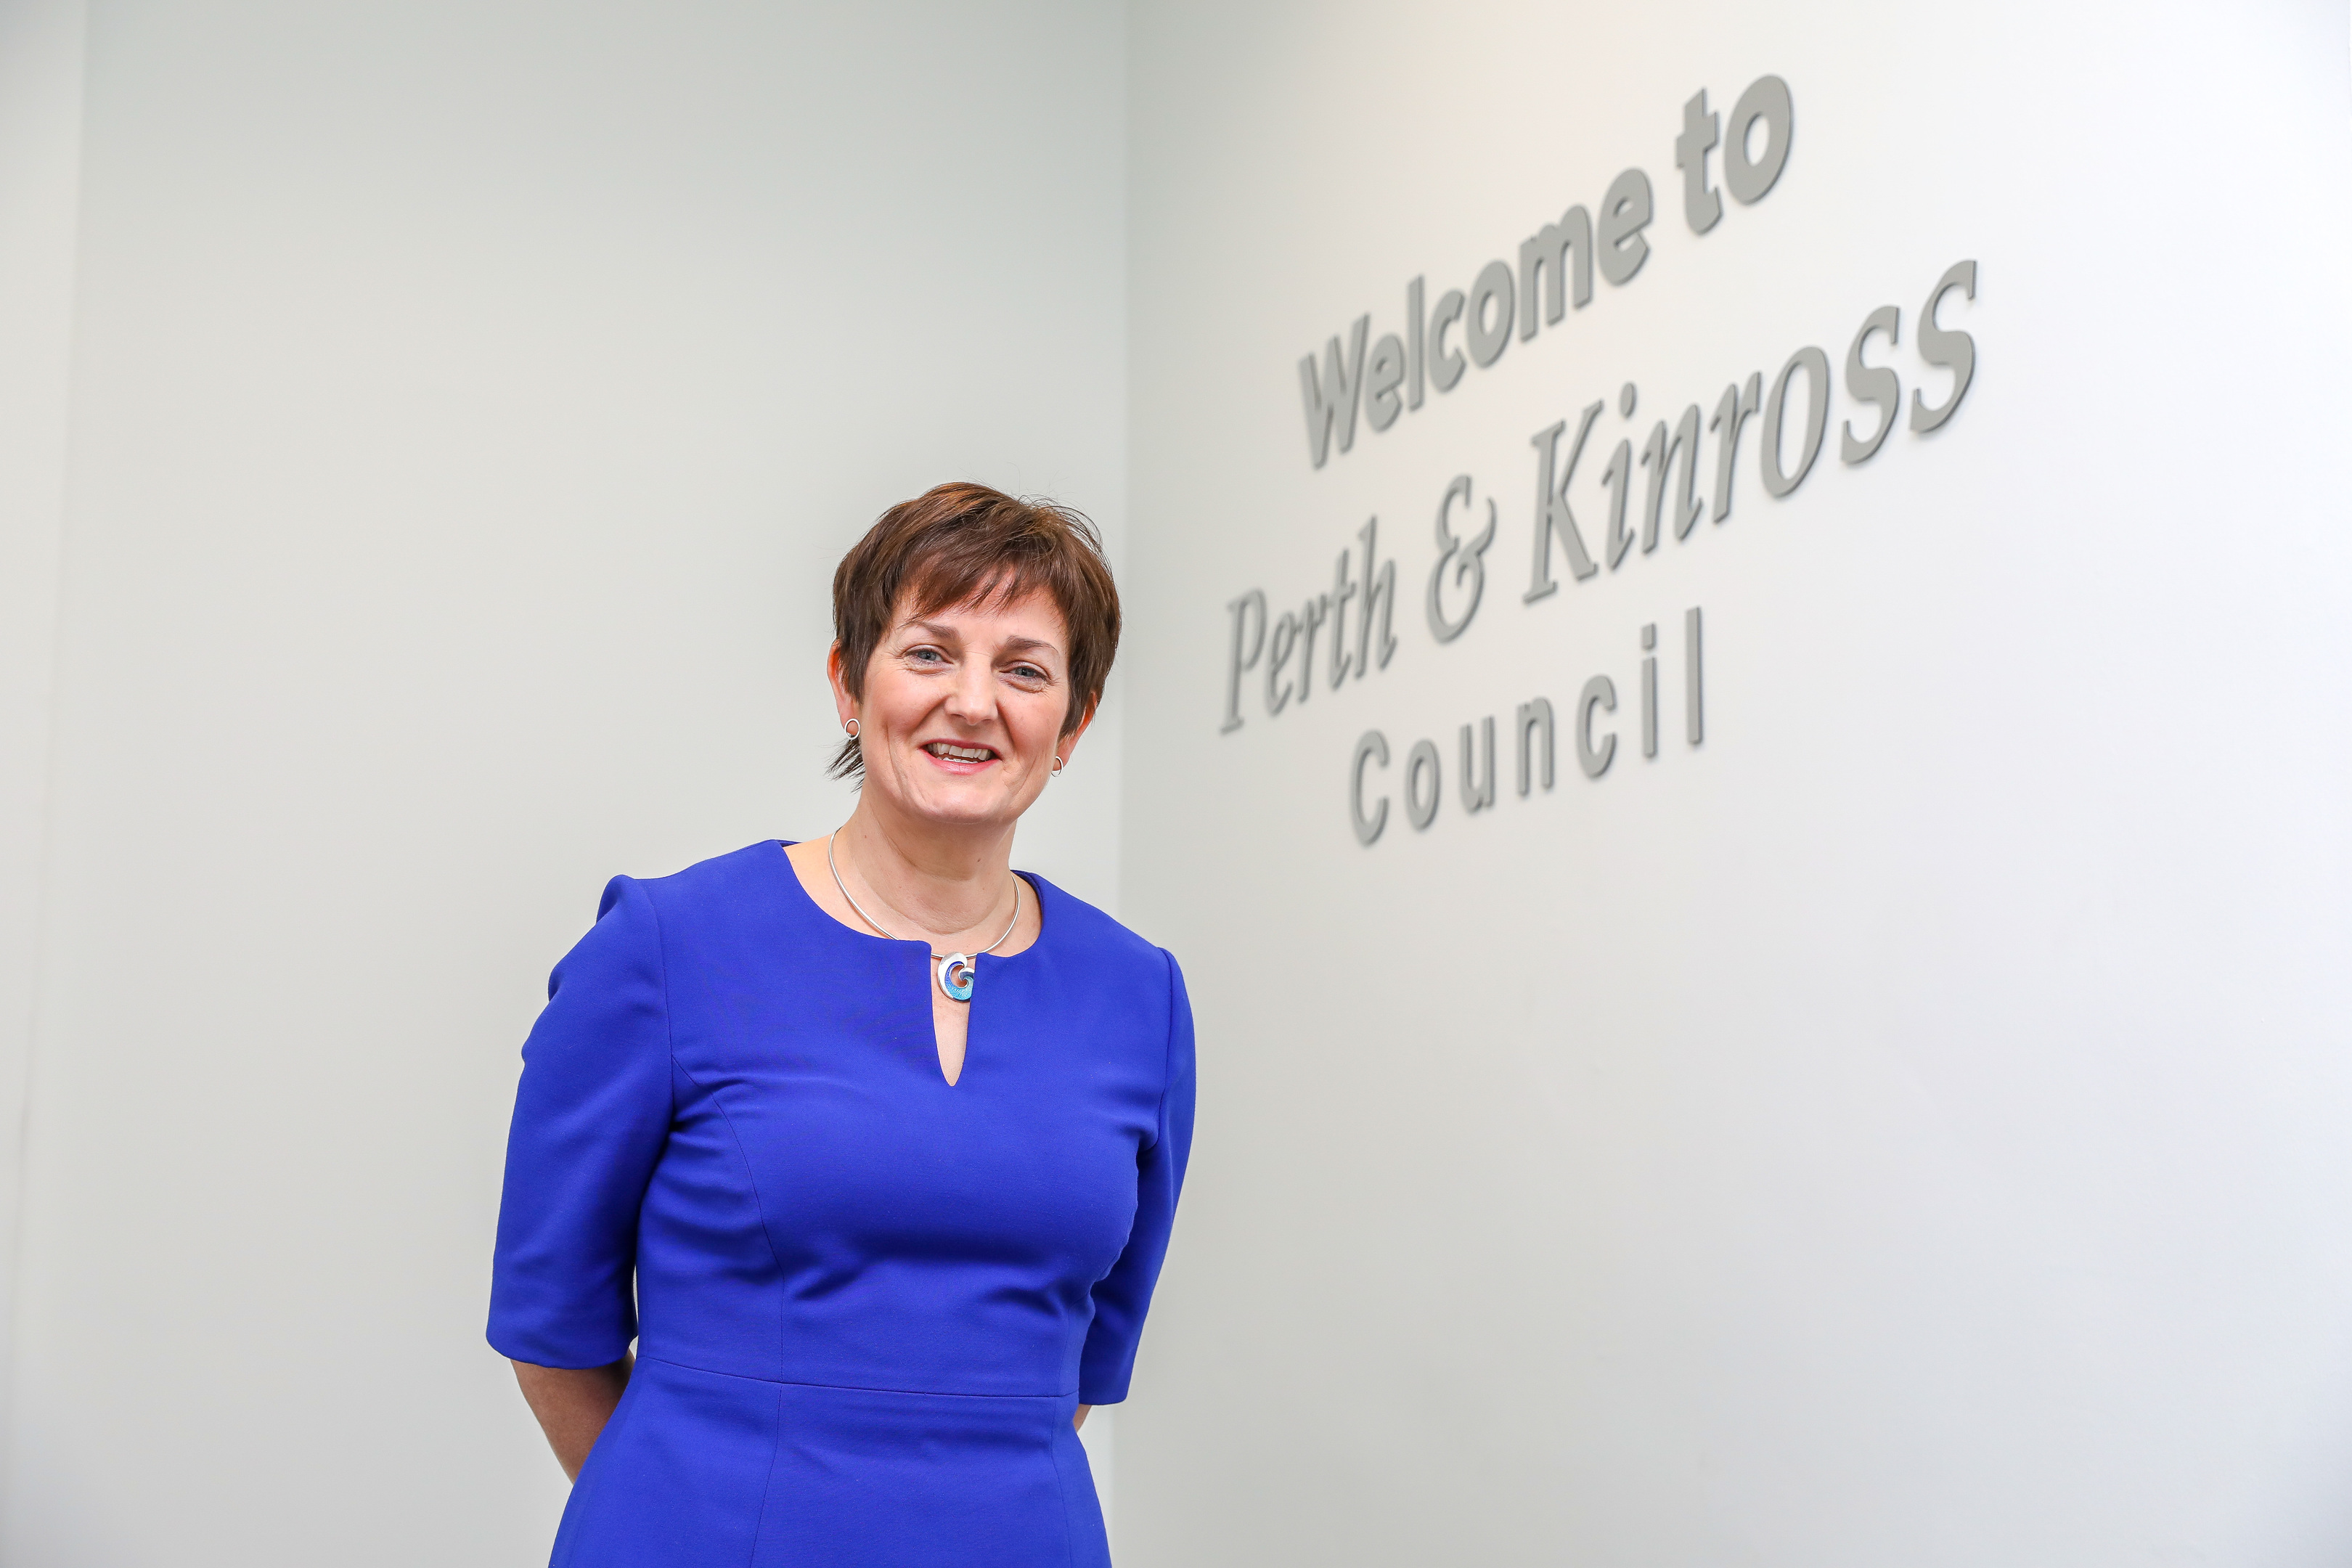 Perth and Kinross Council chief executive Karen Reid.